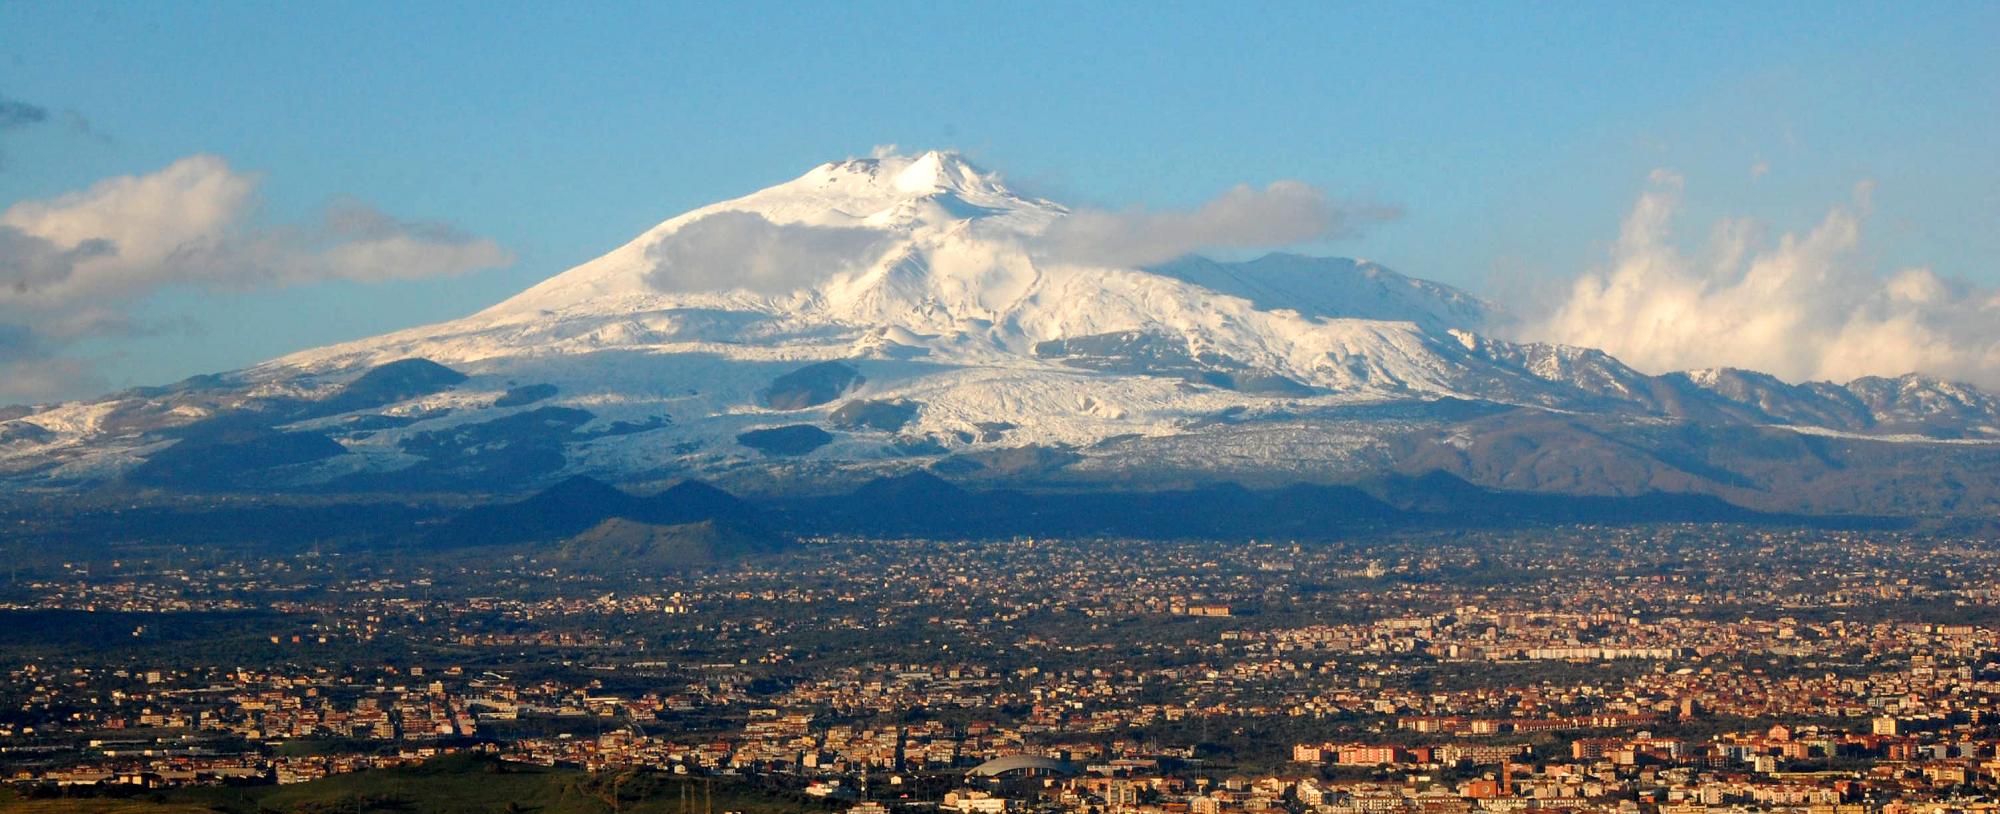 BenAveling - Opera propria, CC BY-SA 4.0, https://en.wikipedia.org/wiki/Mount_Etna#/media/File:Mt_Etna_and_Catania1.jpg